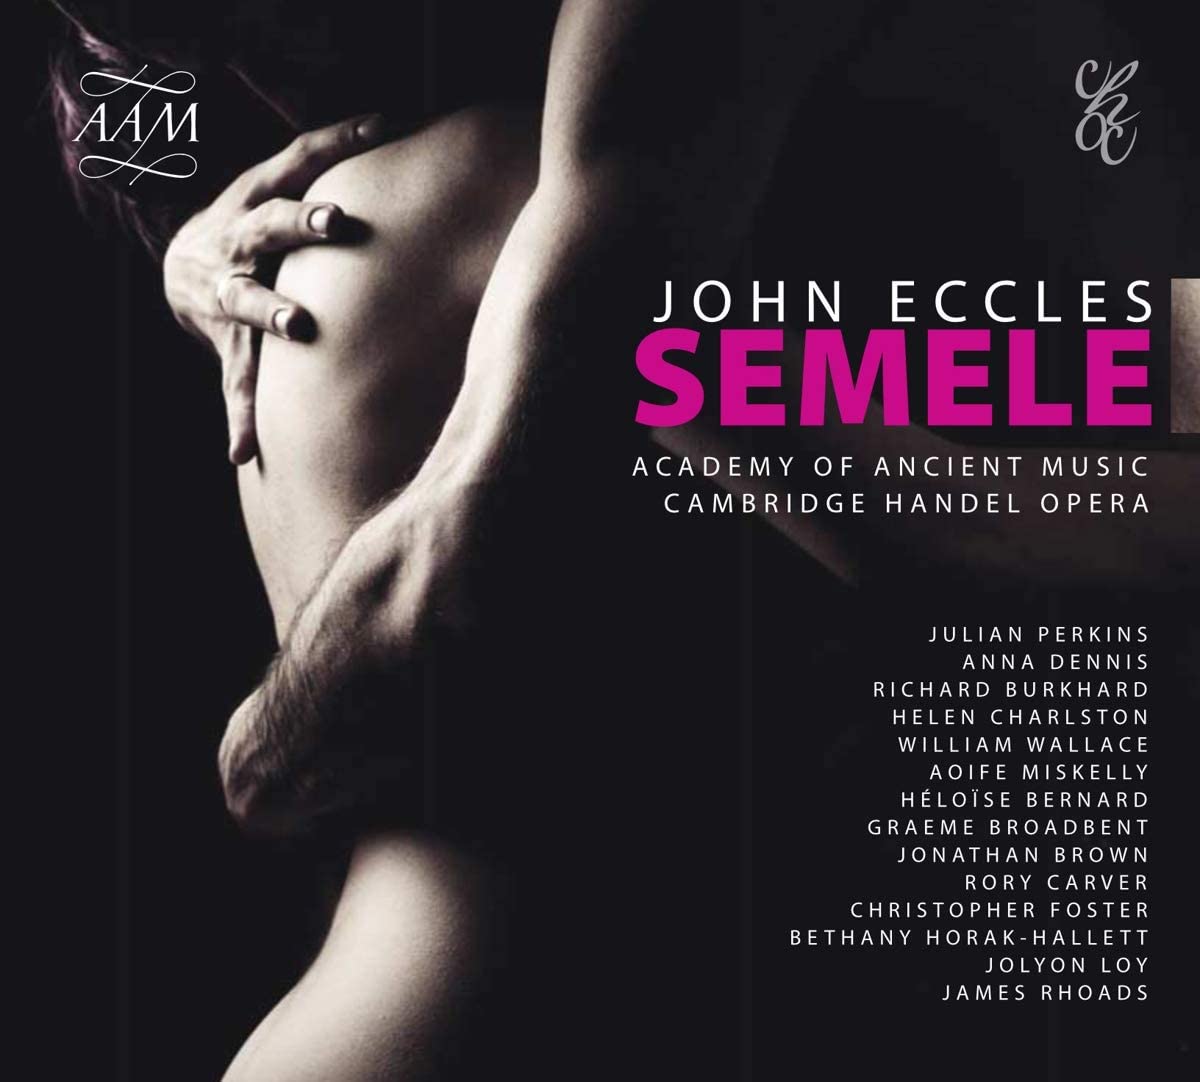 CD cover Eccles Semele Academy of Ancient Music Cambridge Handel Opera Julian Perkins